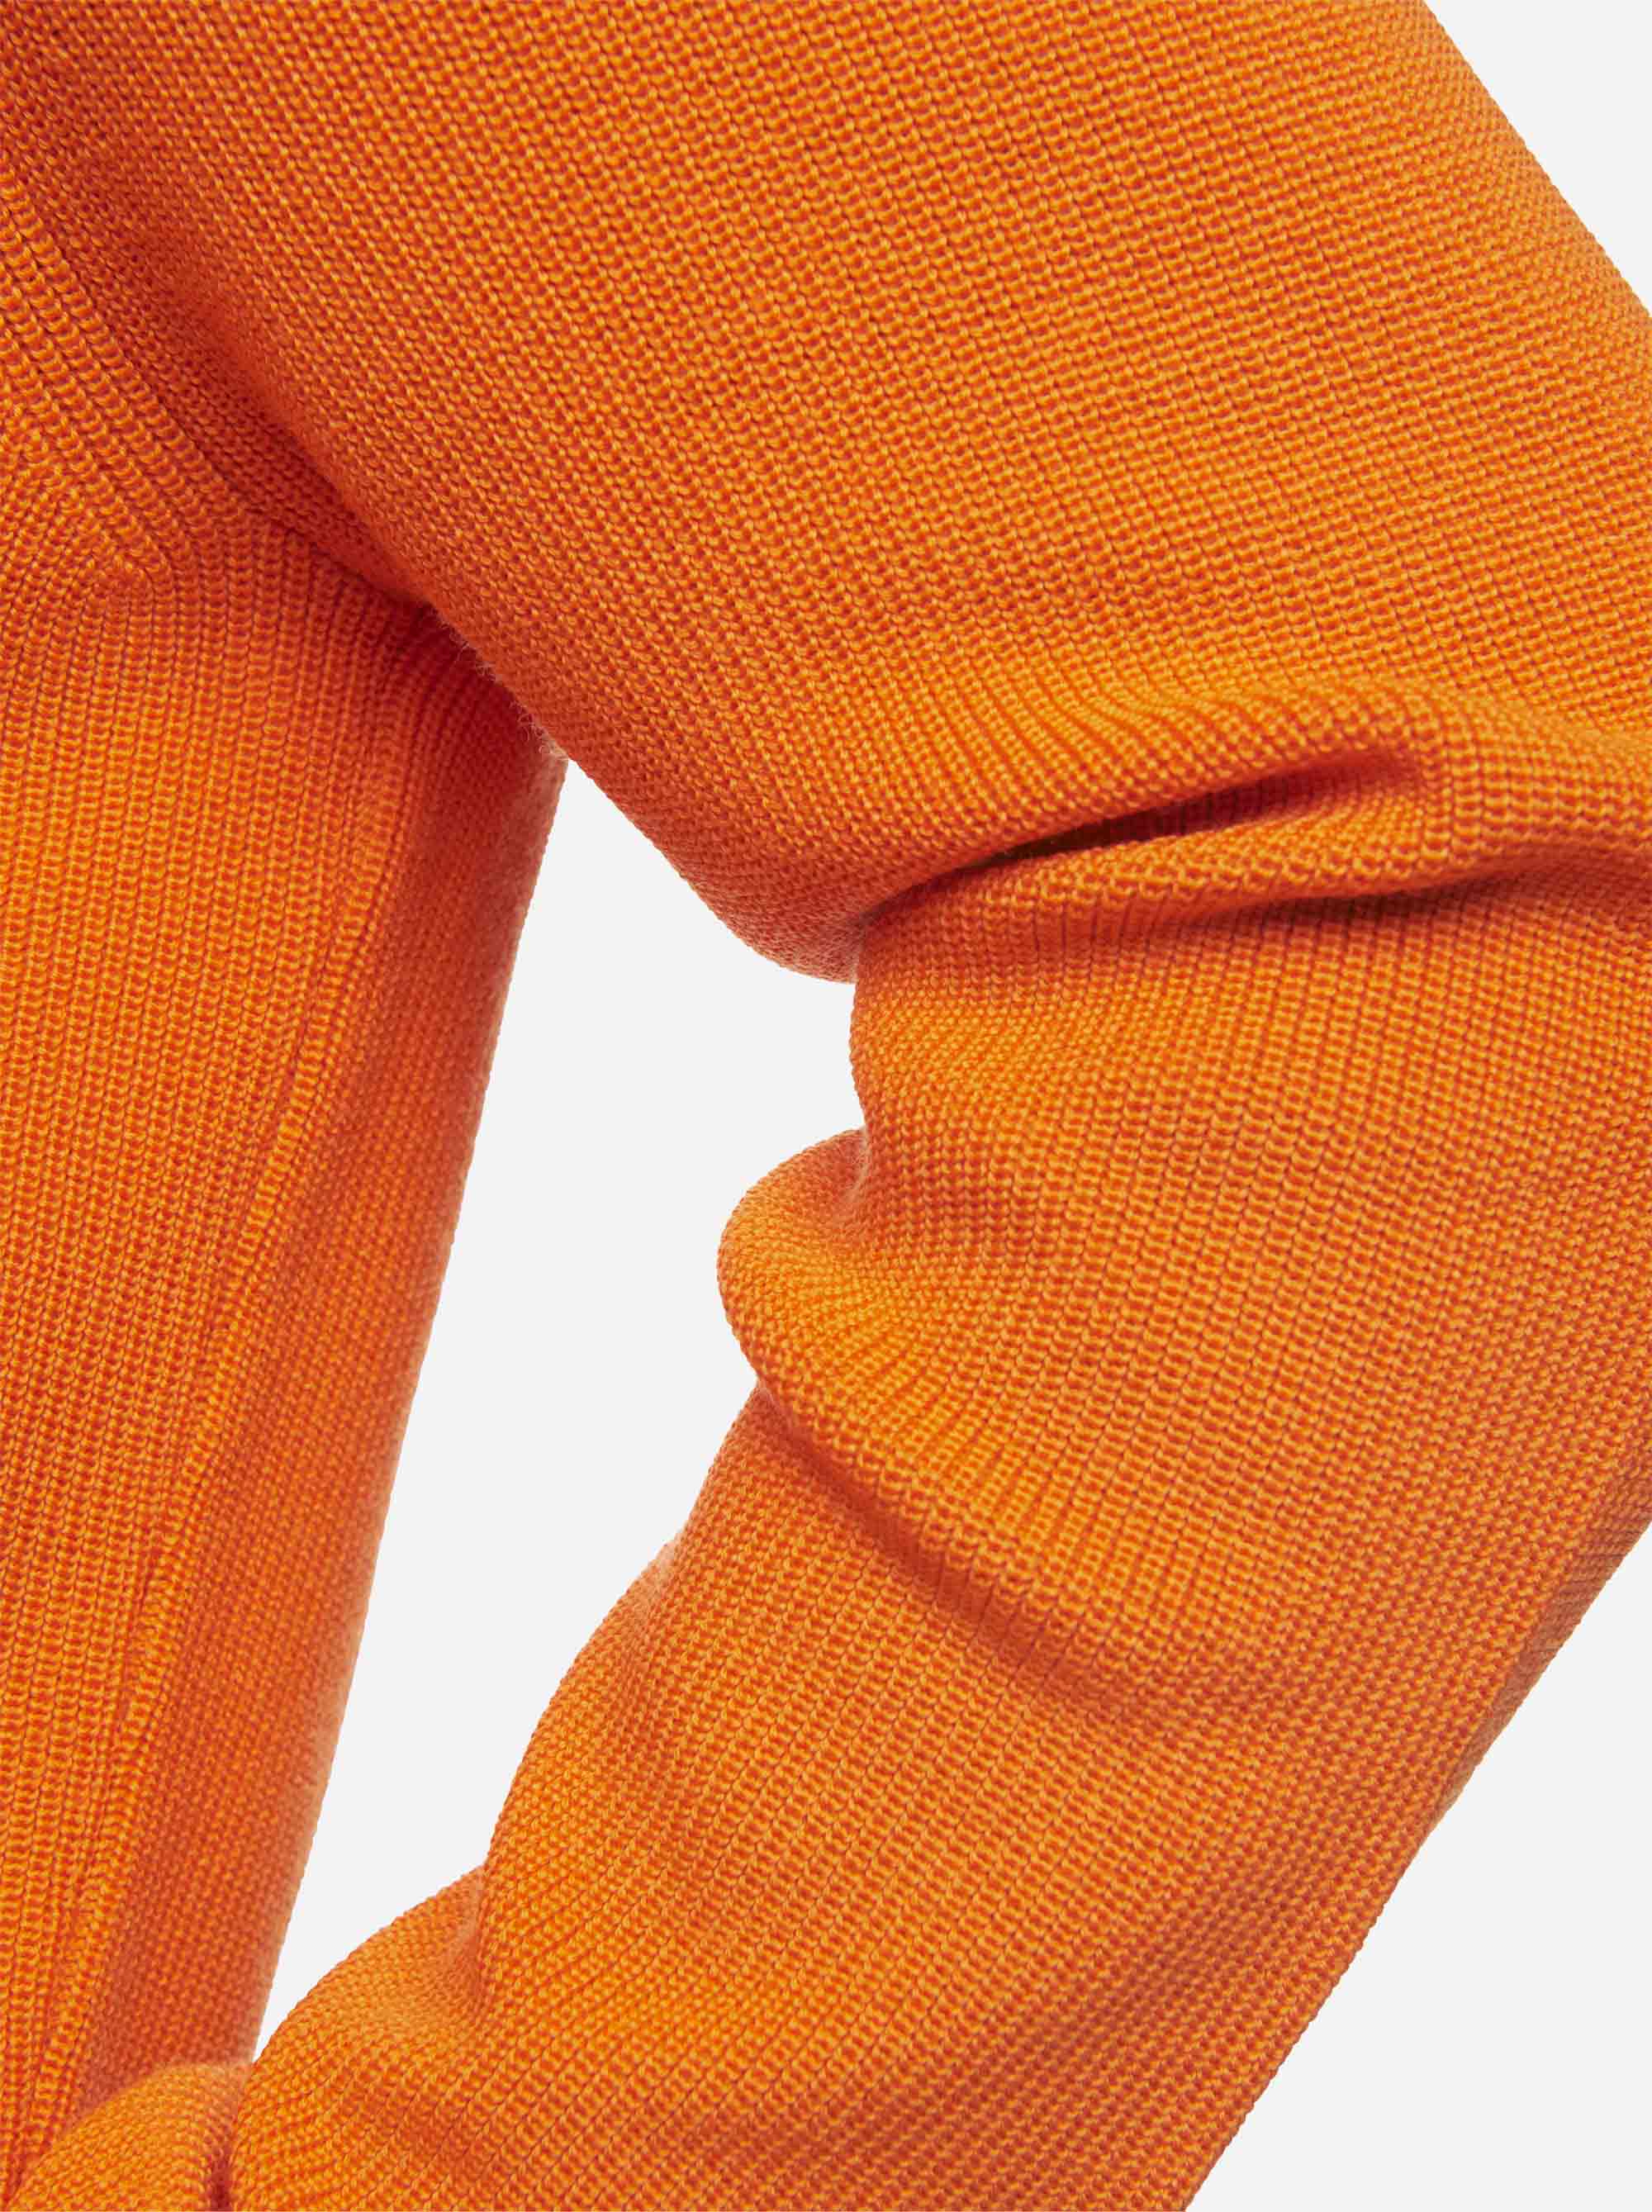 Teym - The Merino Sweater - Crewneck - Men - Orange - 3